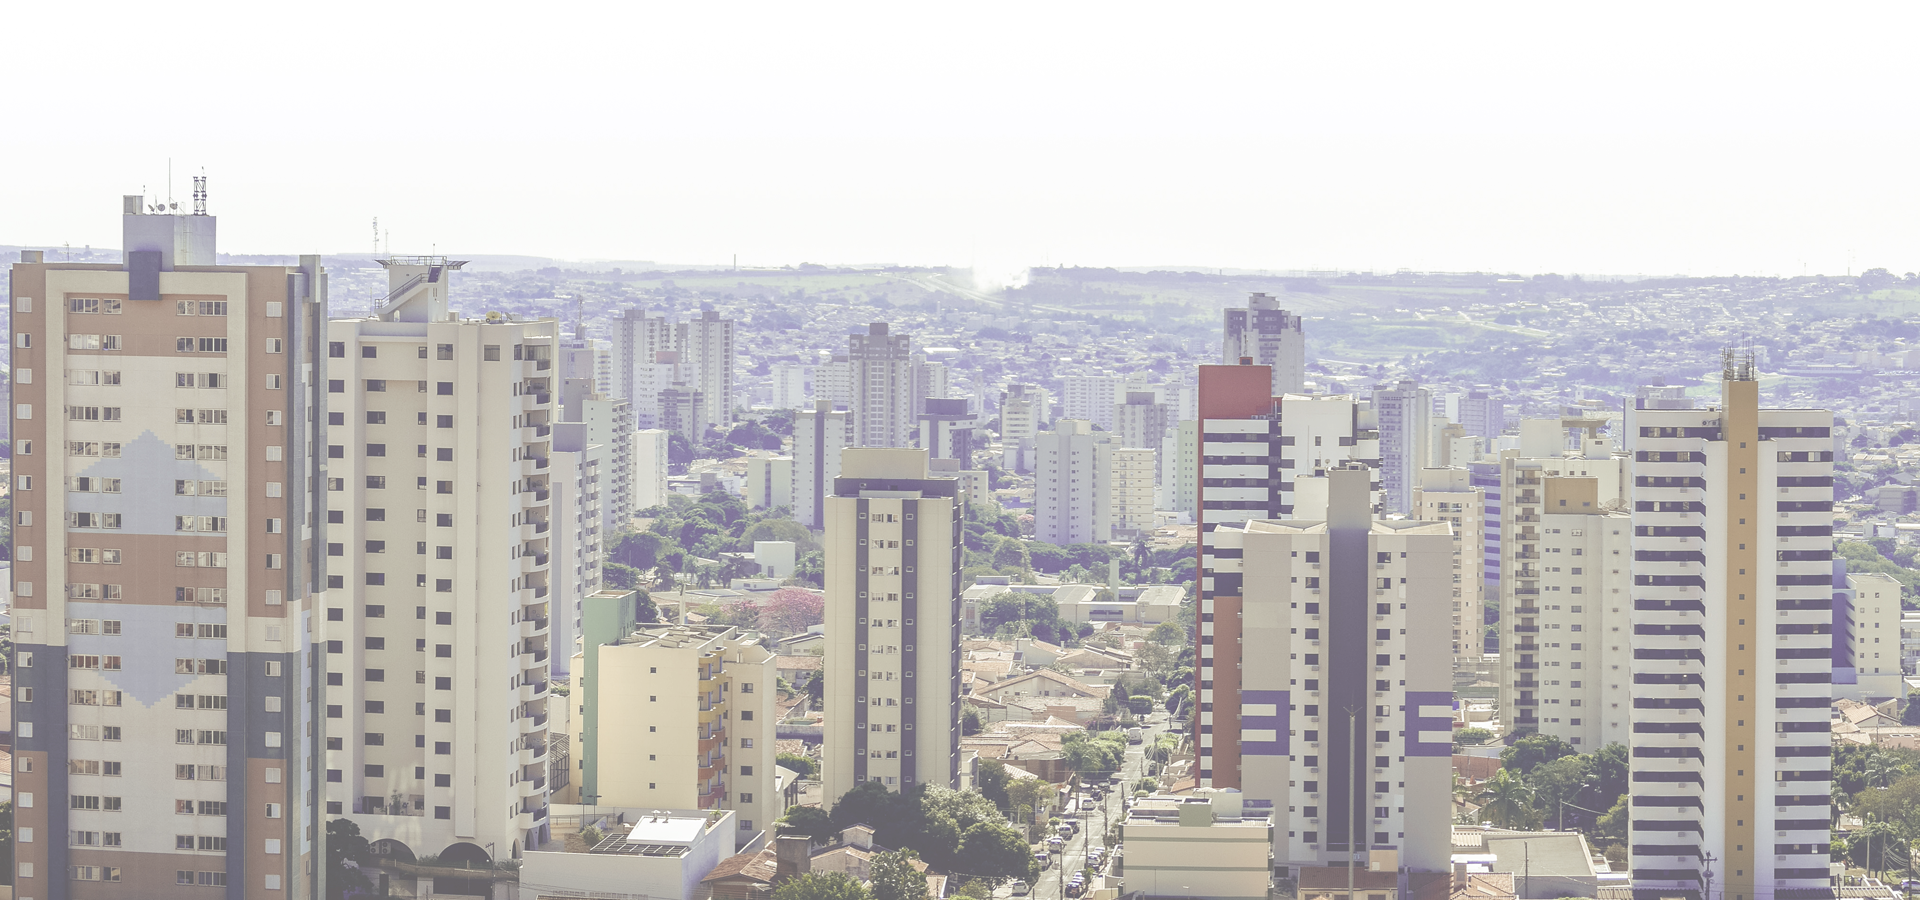 <b>Bauru, São Paulo, Southeast Region, Brazil</b>